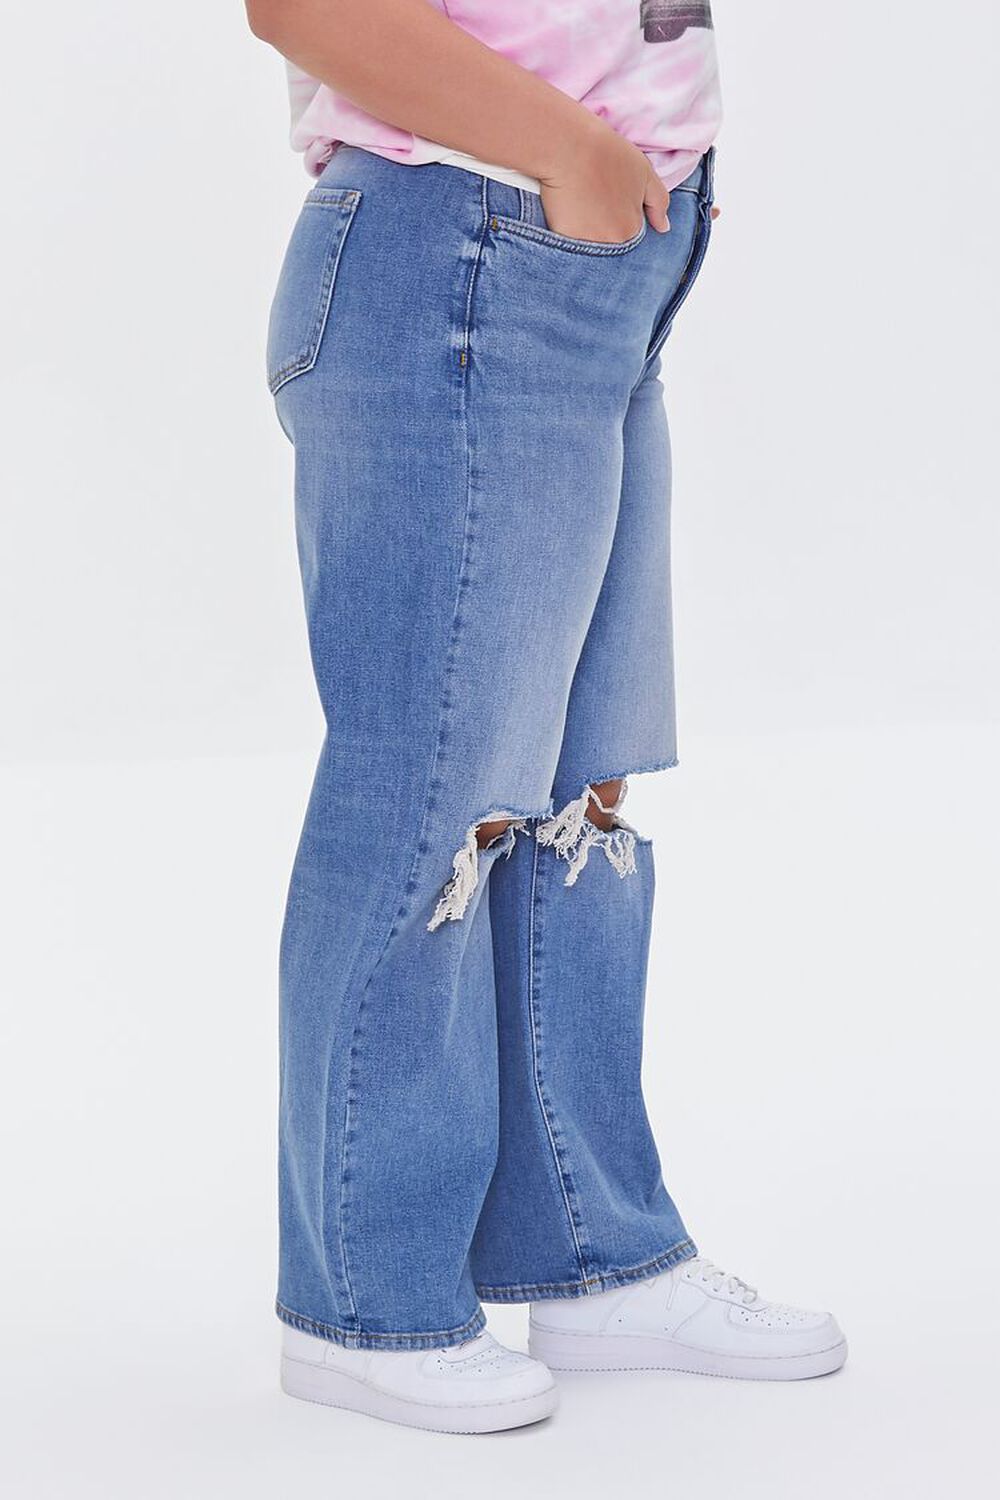 MEDIUM DENIM Plus Size Distressed Straight-Leg Jeans, image 3